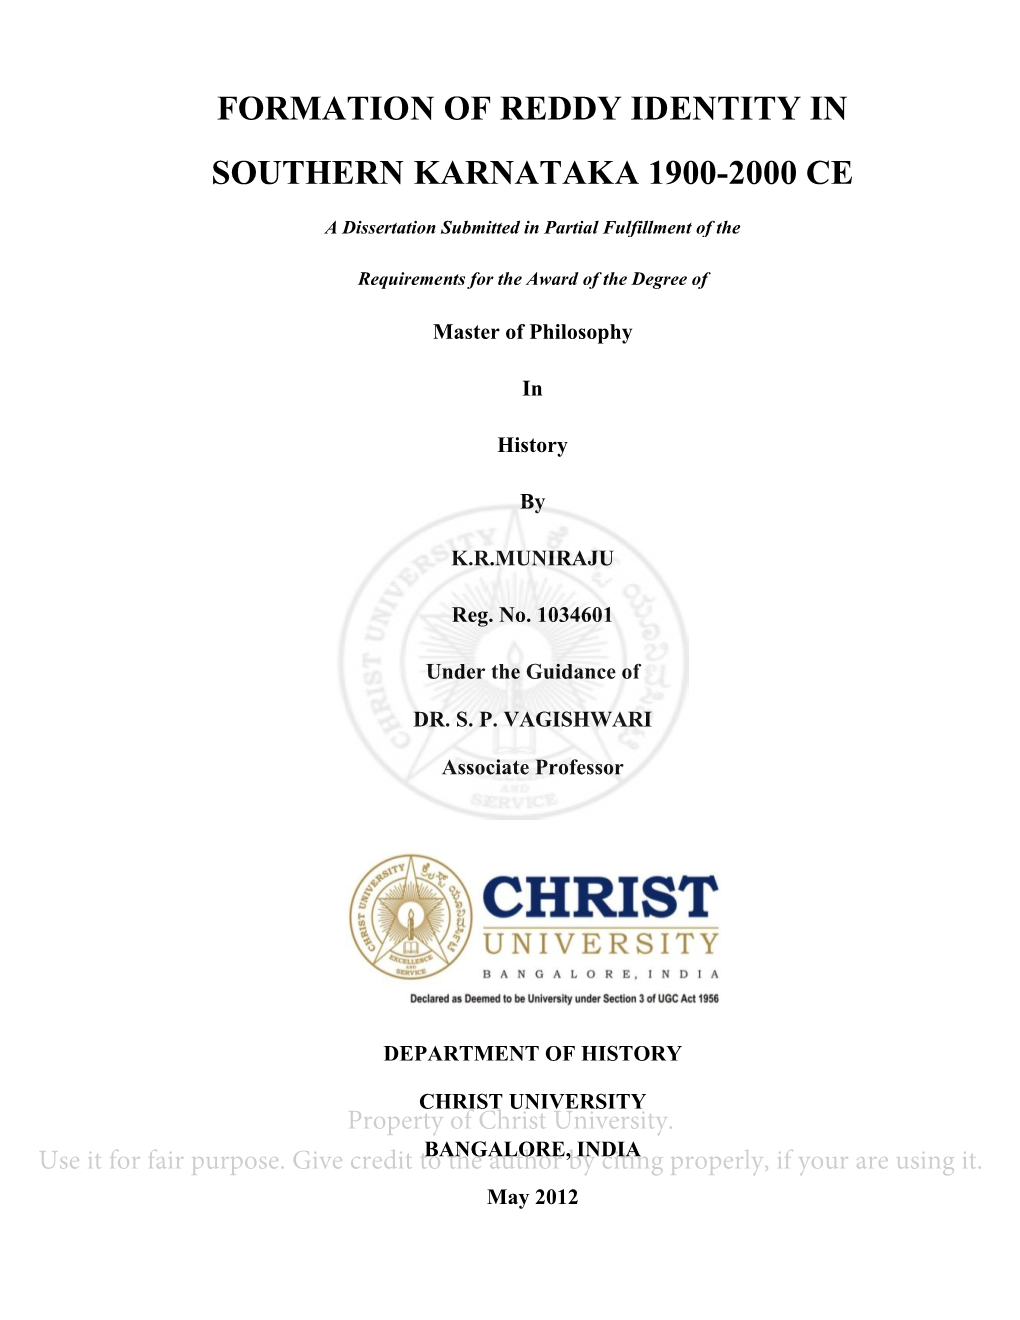 Formation of Reddy Identity in Southern Karnataka 1900-2000 Ce